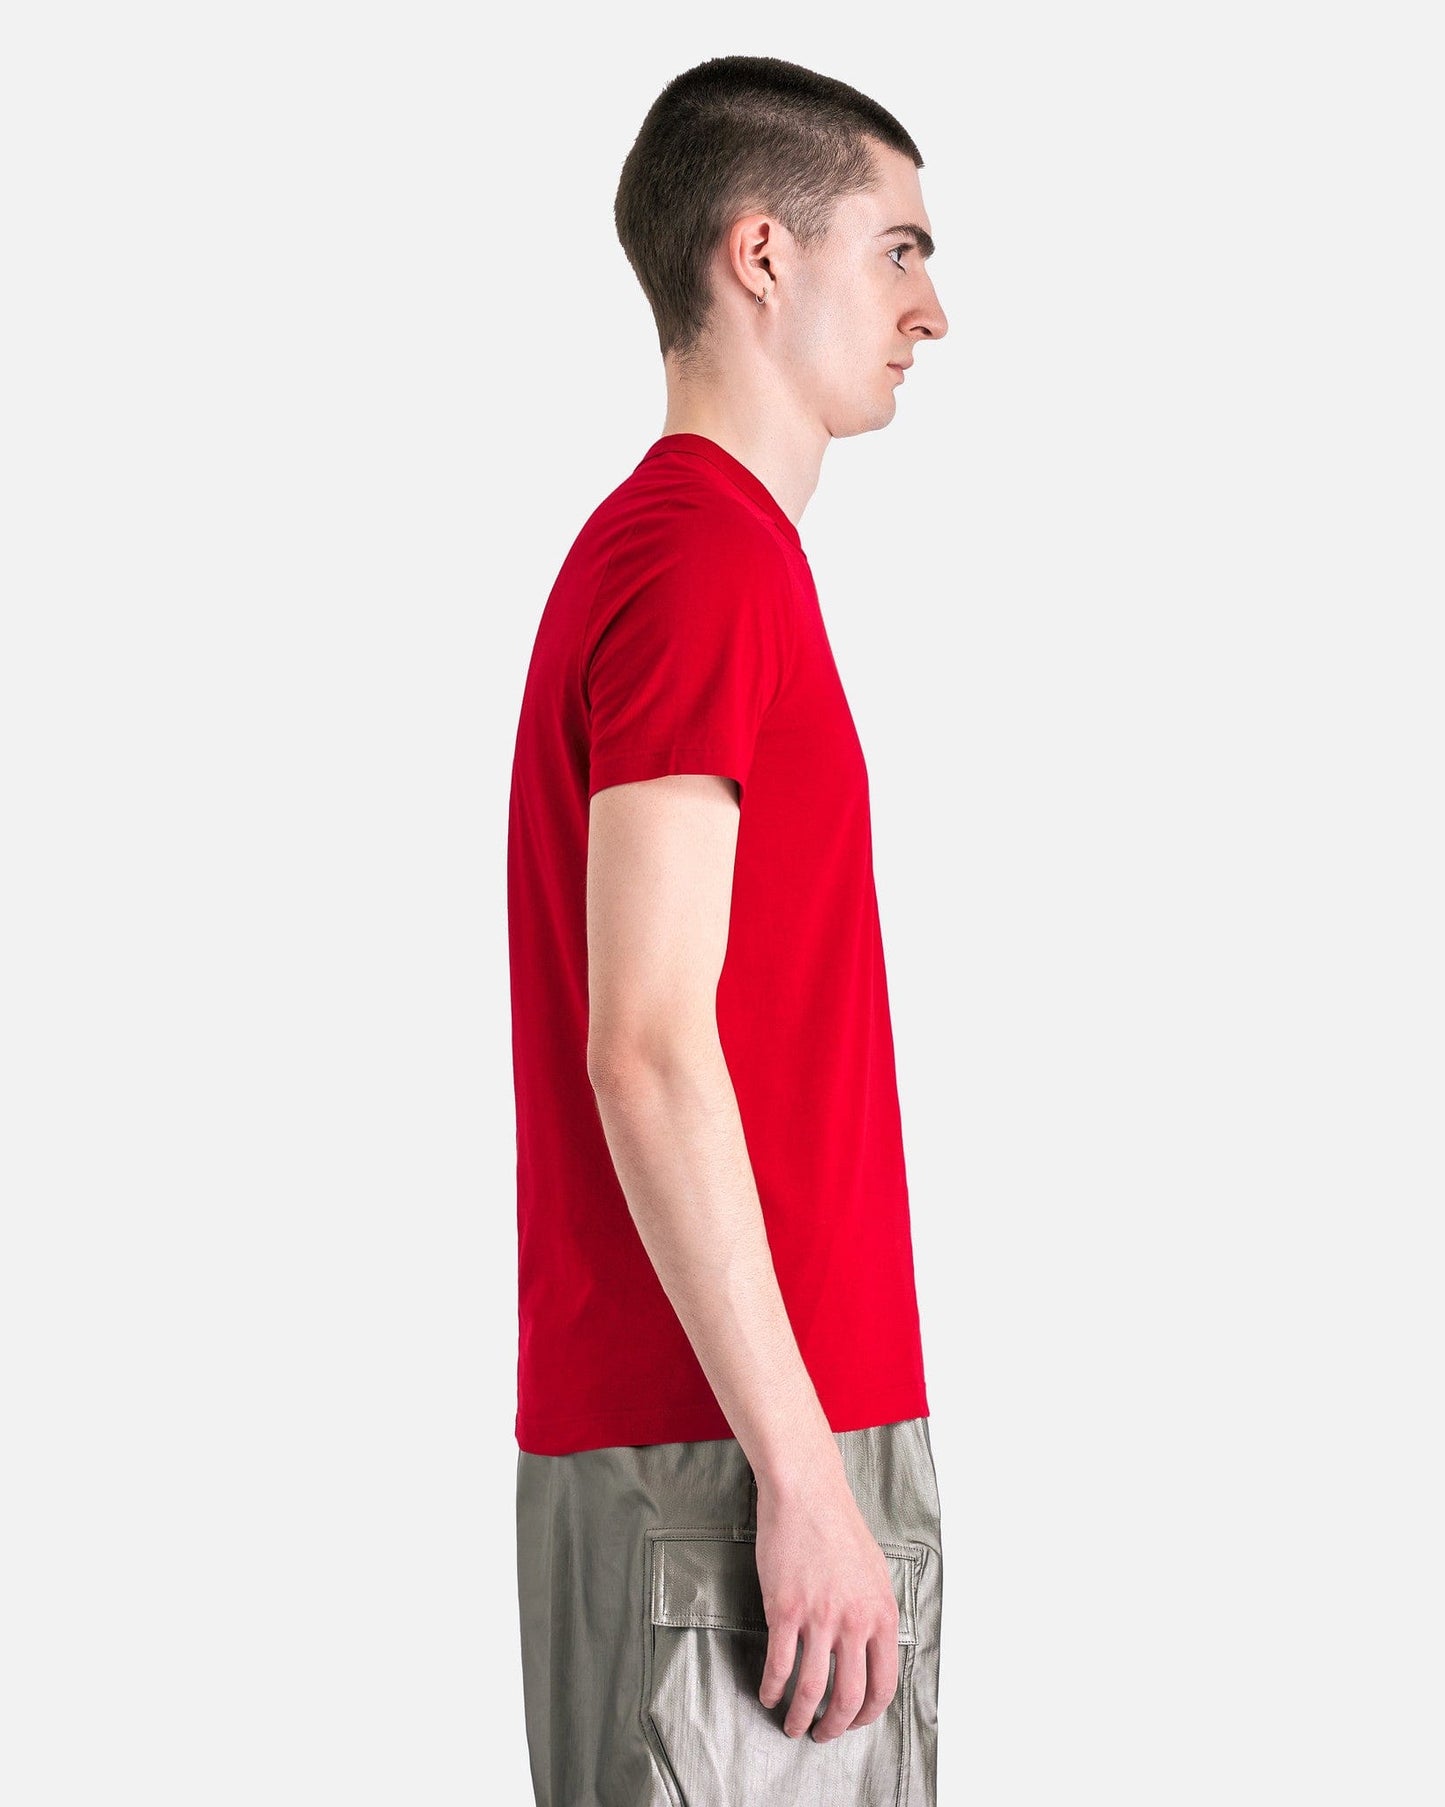 Rick Owens Men's T-Shirts Short Level T-Shirt in Cardinal Red